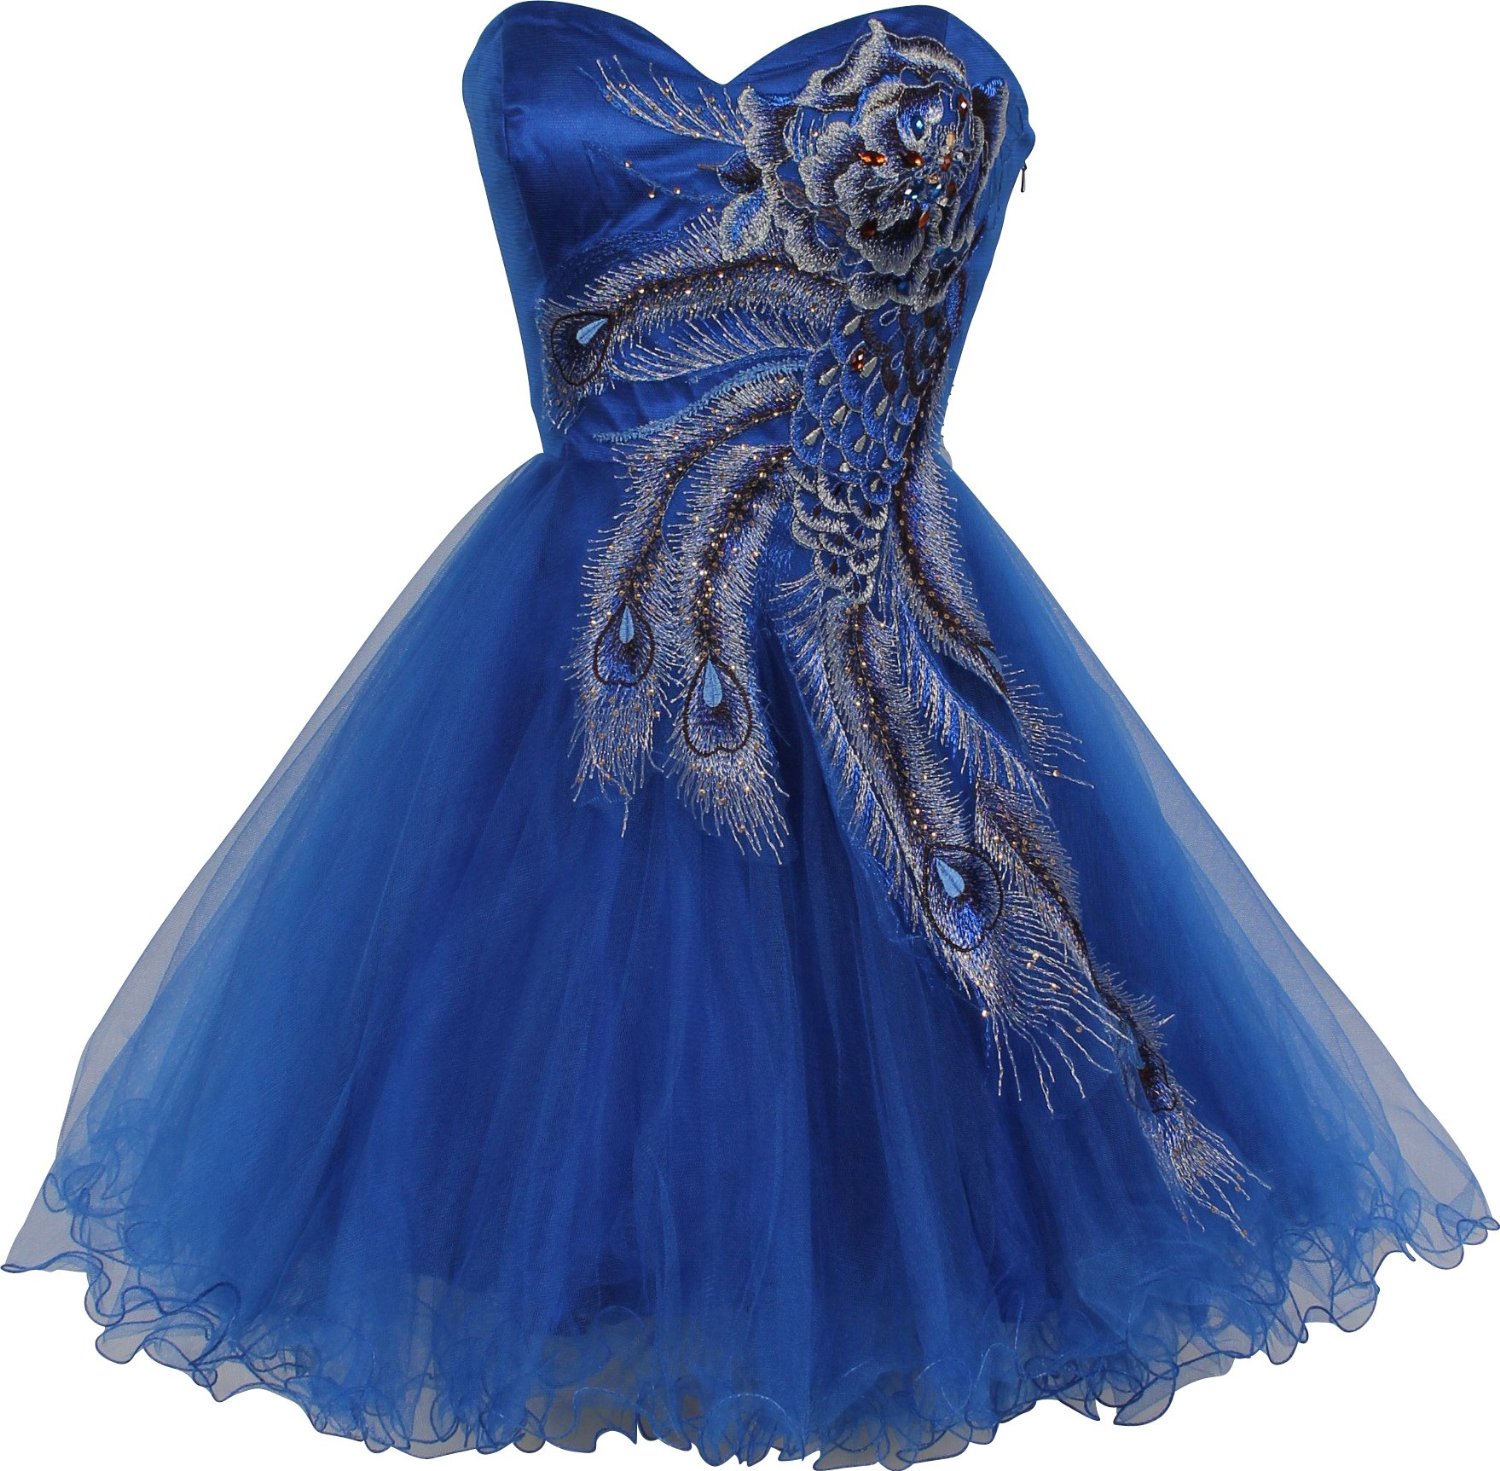 http://1.bp.blogspot.com/-_S672WFeq2o/UNVNY6n9PvI/AAAAAAAACIE/xlUgRRgAoDk/s1600/royal-blue-short-peacock-prom-dresses.jpg